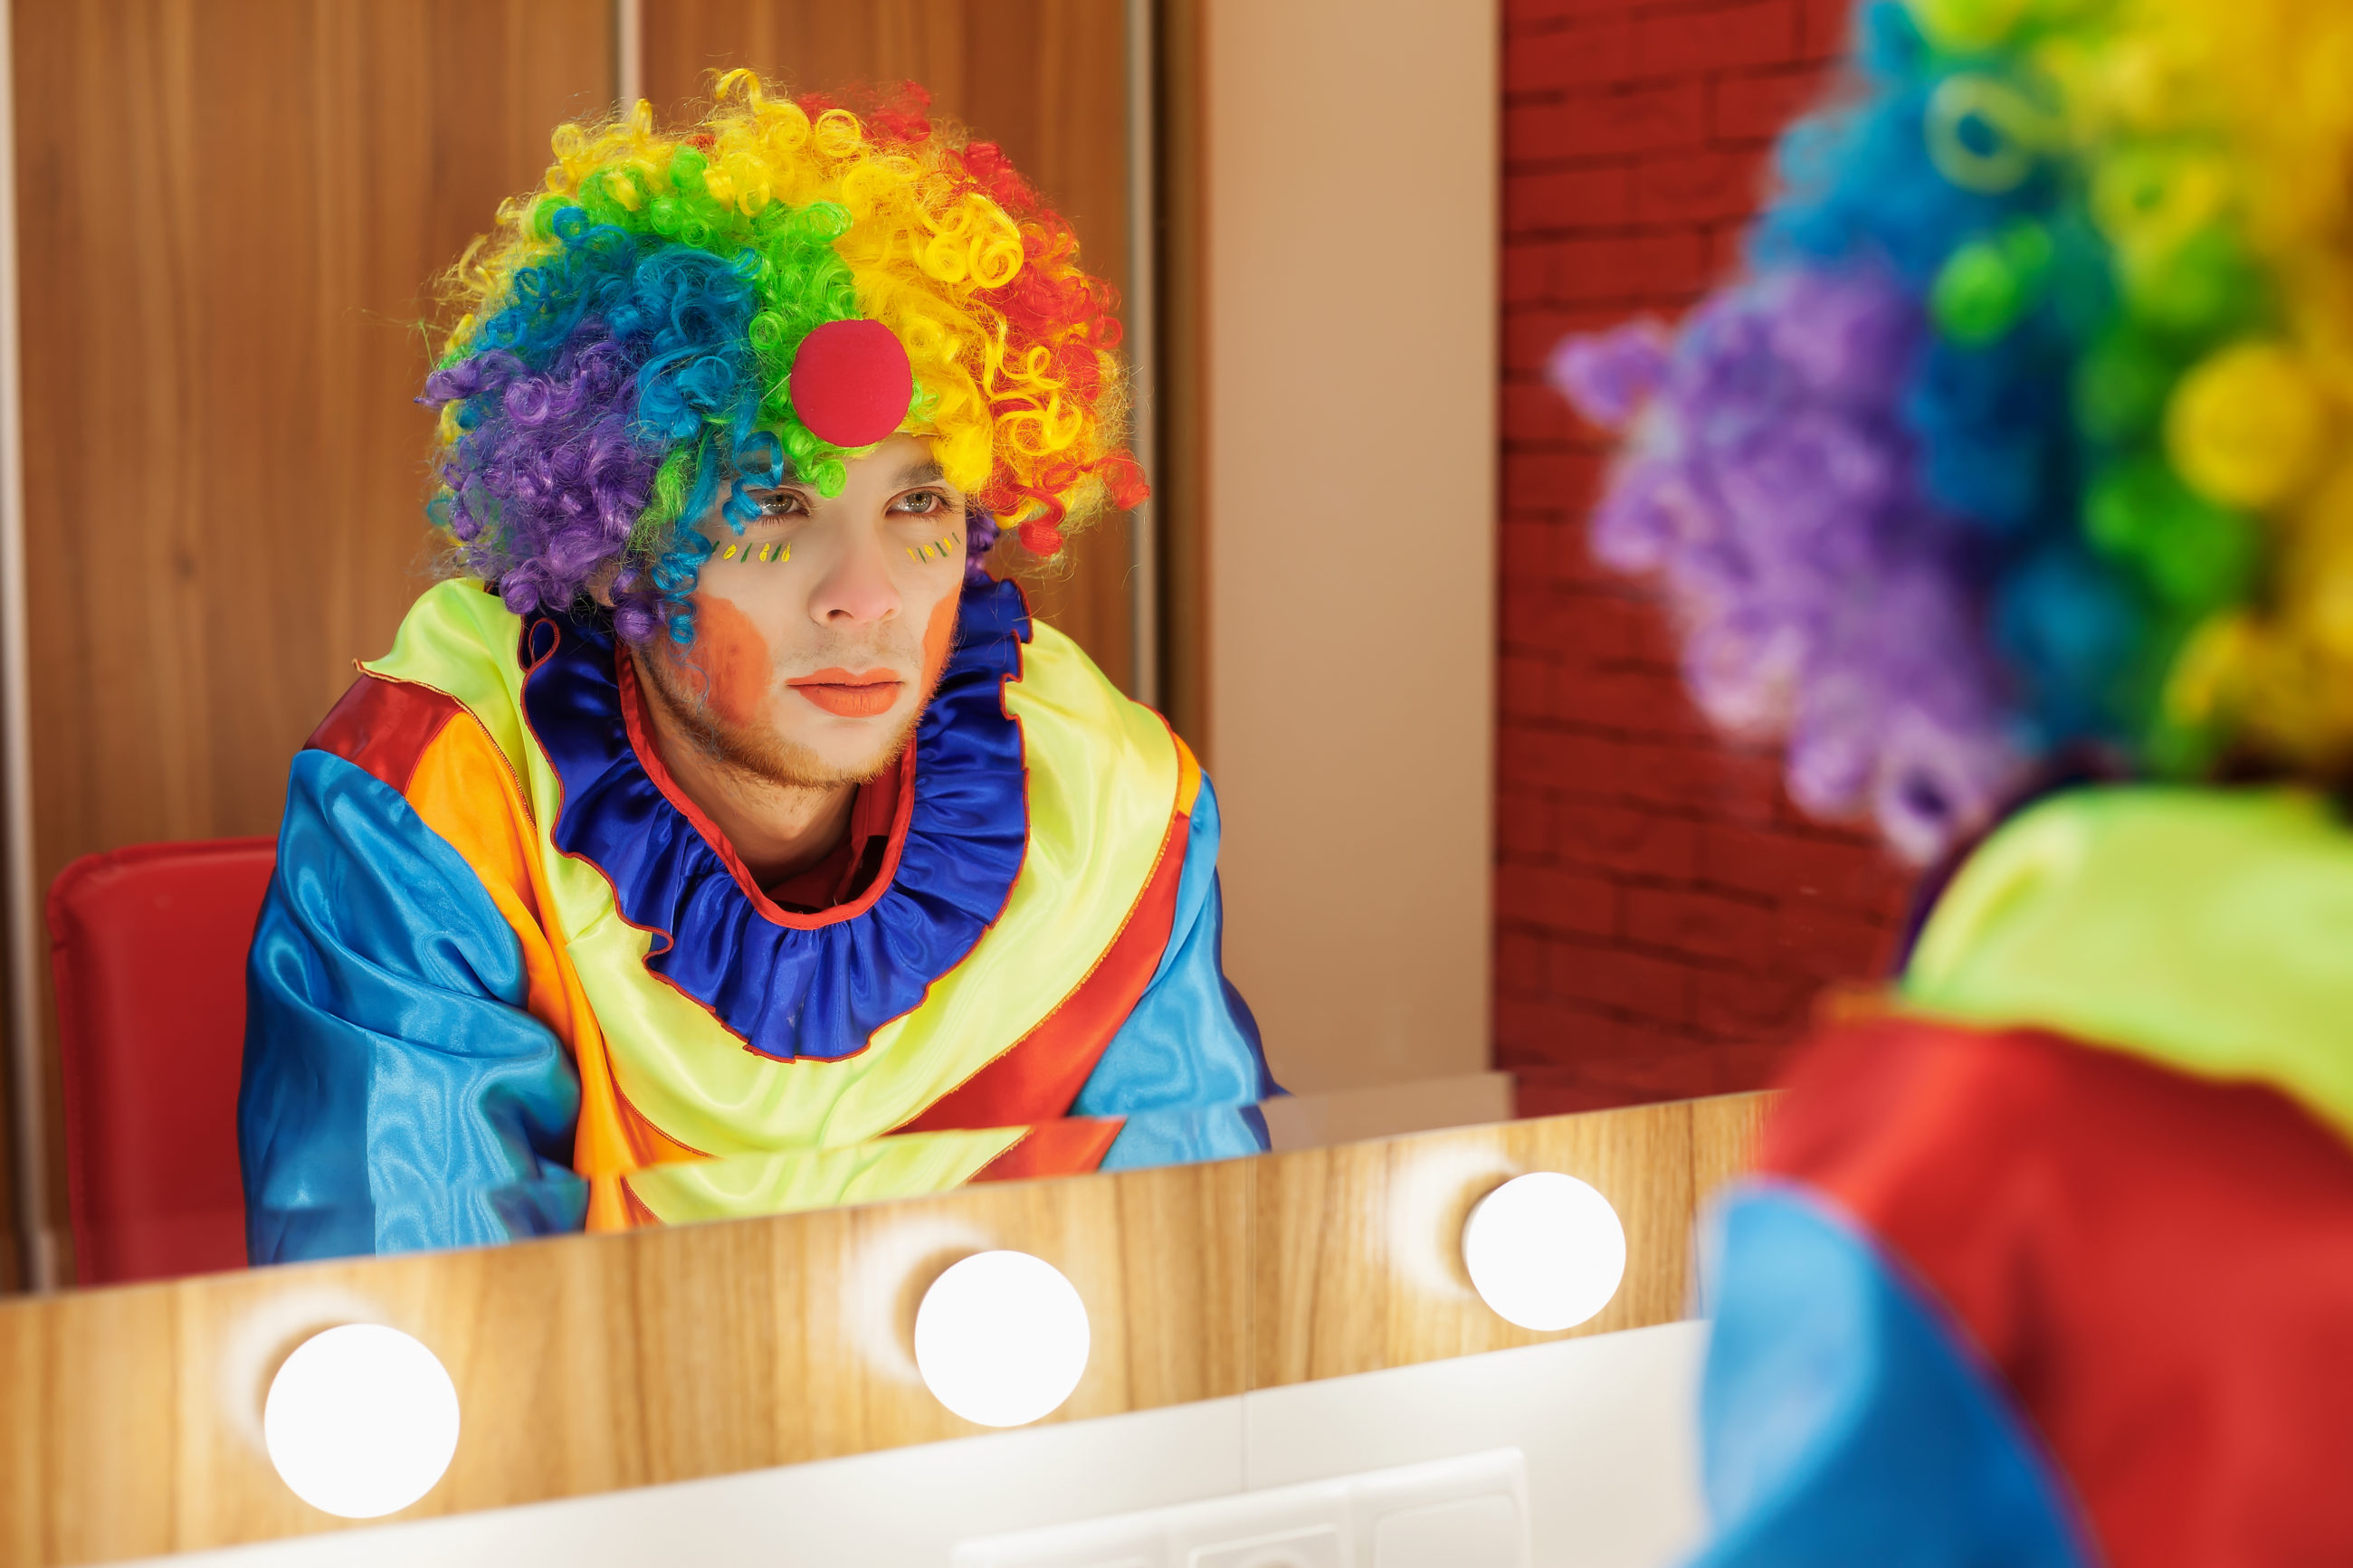 circus clown looks in a mirror in makeup room 2021 08 26 16 26 16 utc